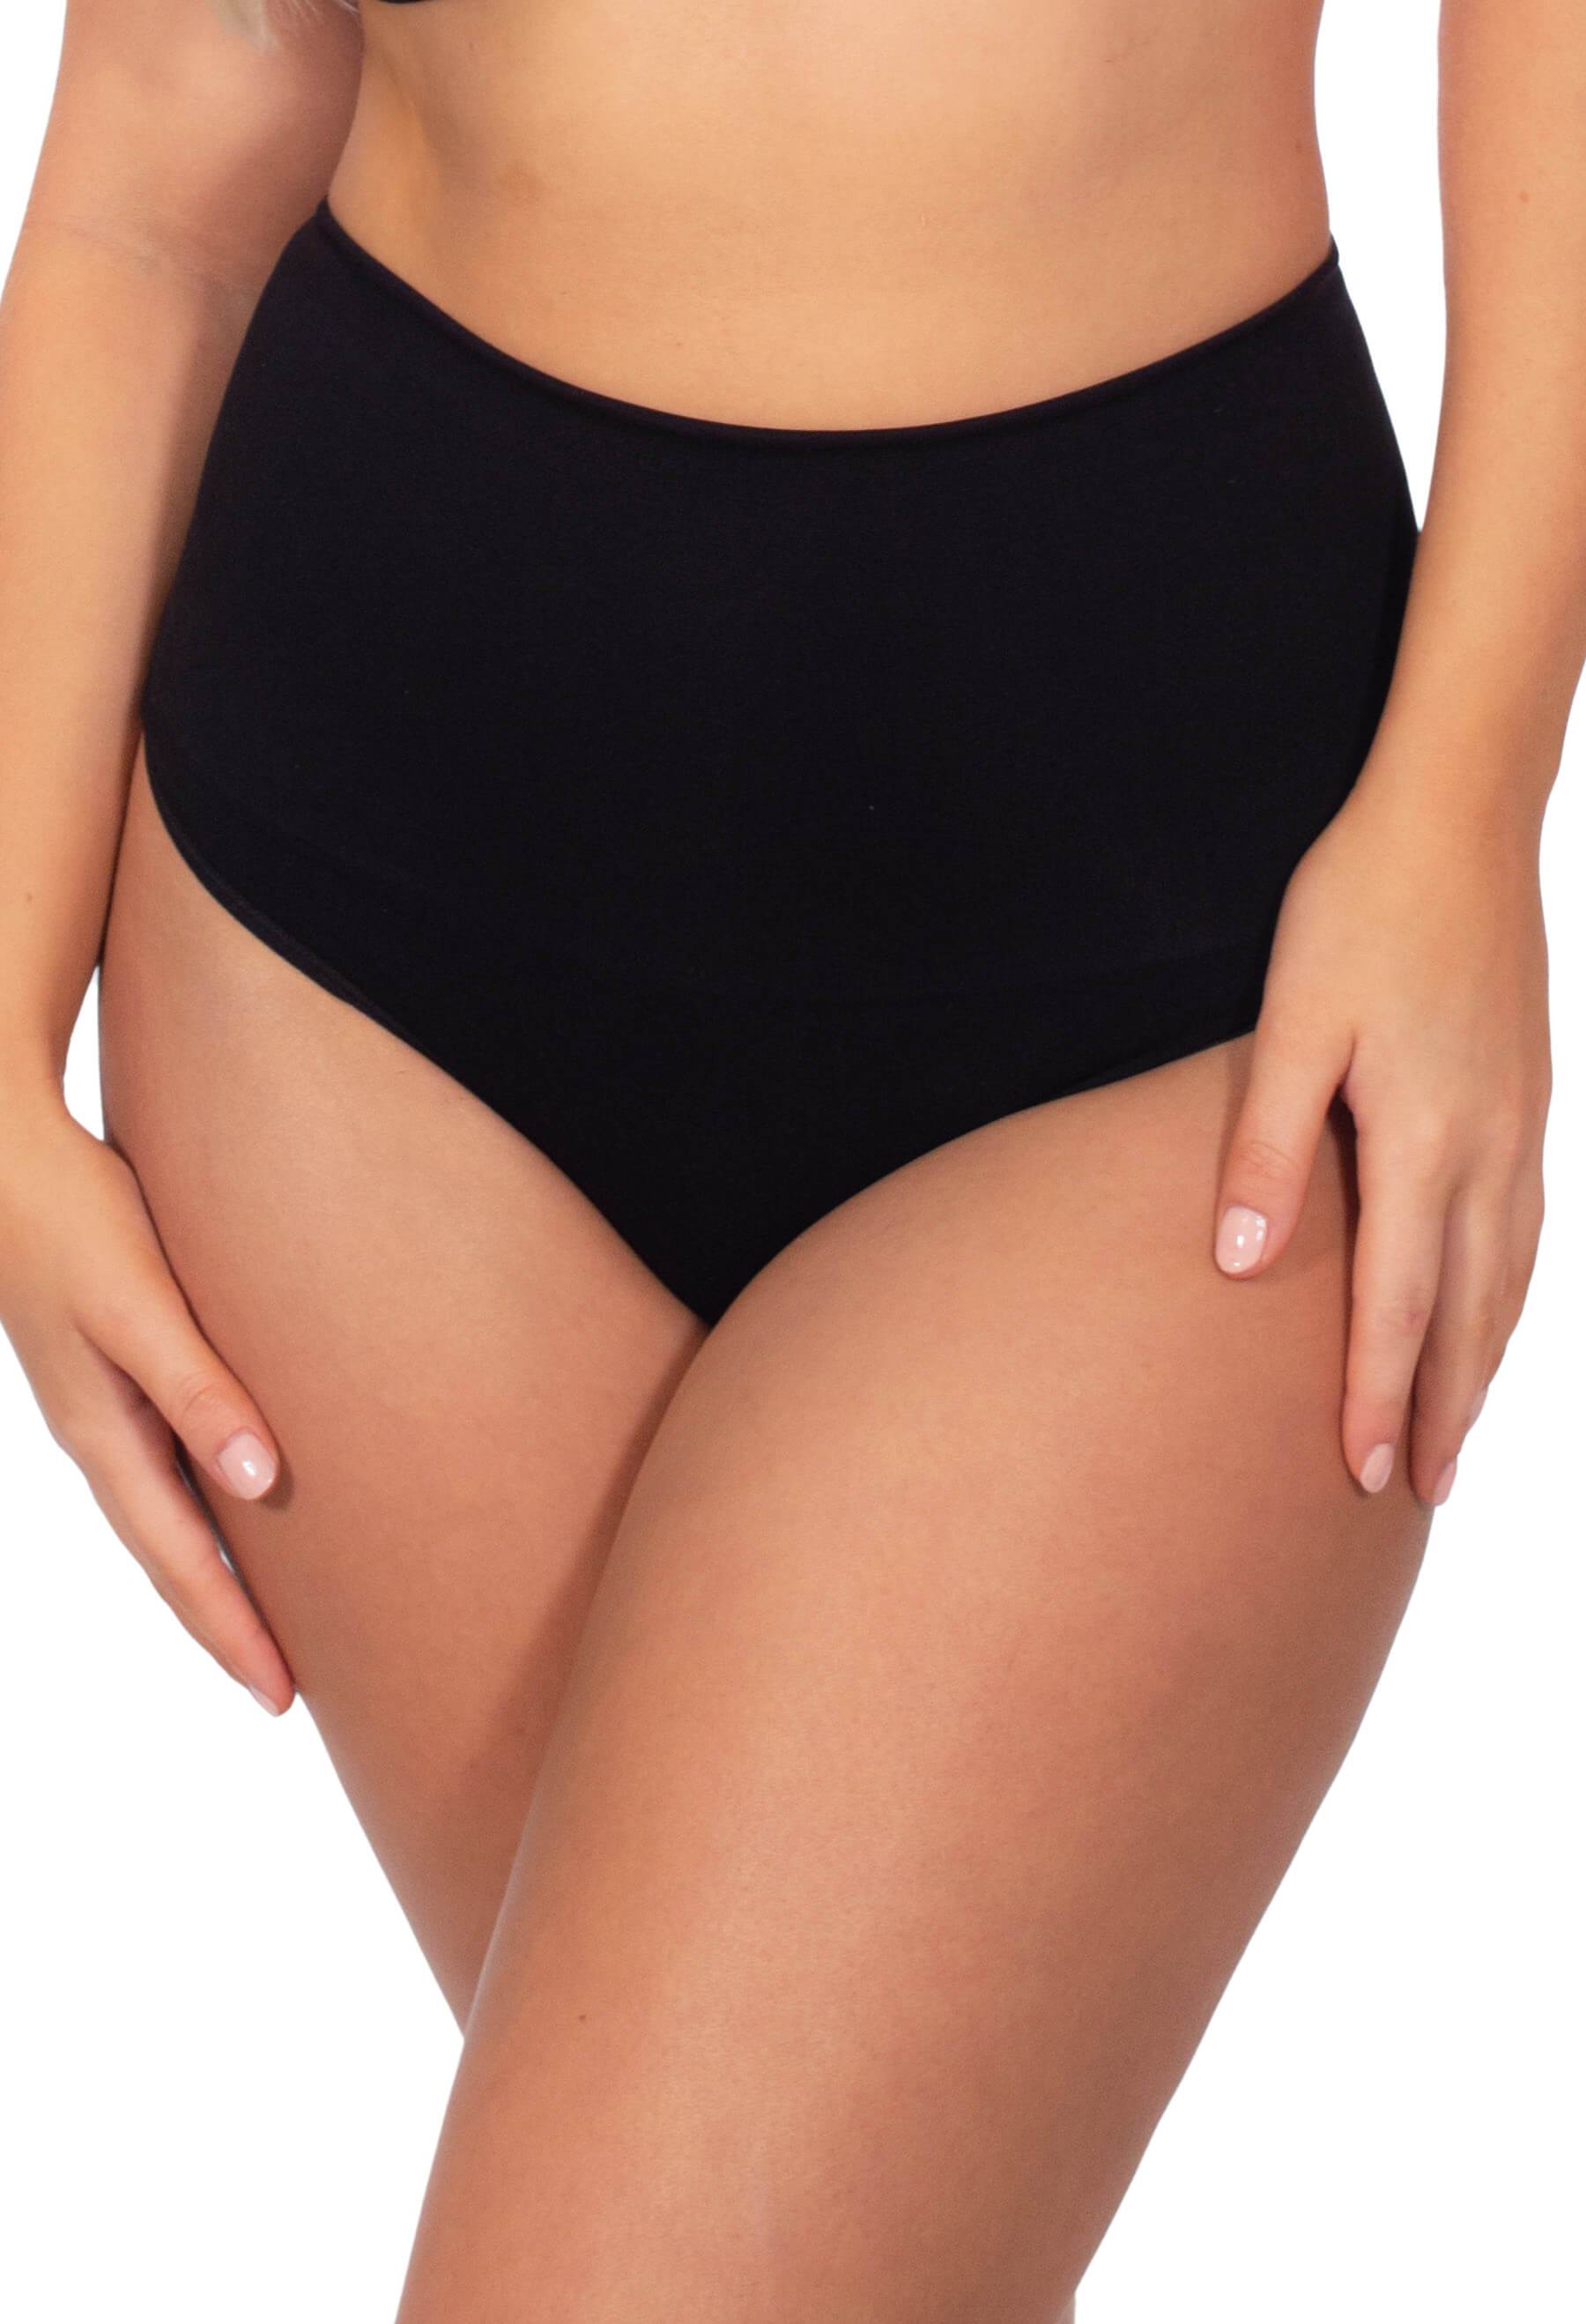  Thong Shapewear For Women Tummy Control Seamless High Waist Body  Shaper Panties Shaping Underwear18# Nude